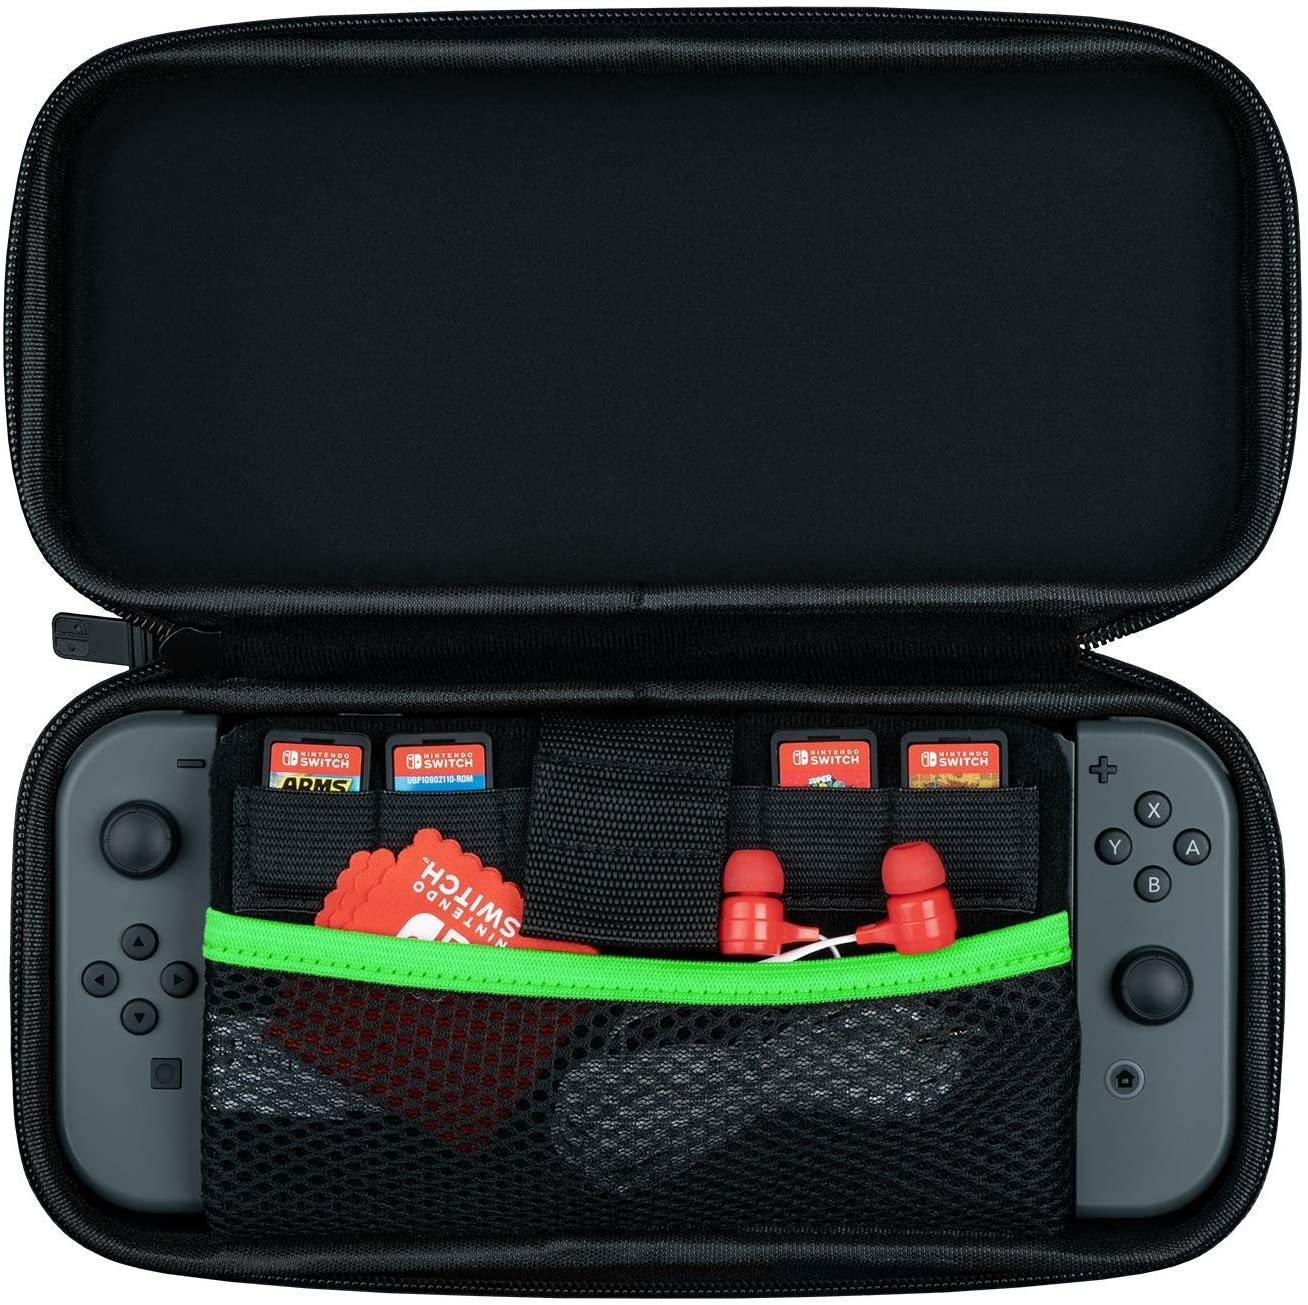 Sacoche de Transport Yoshi - Nintendo Switch pas cher 